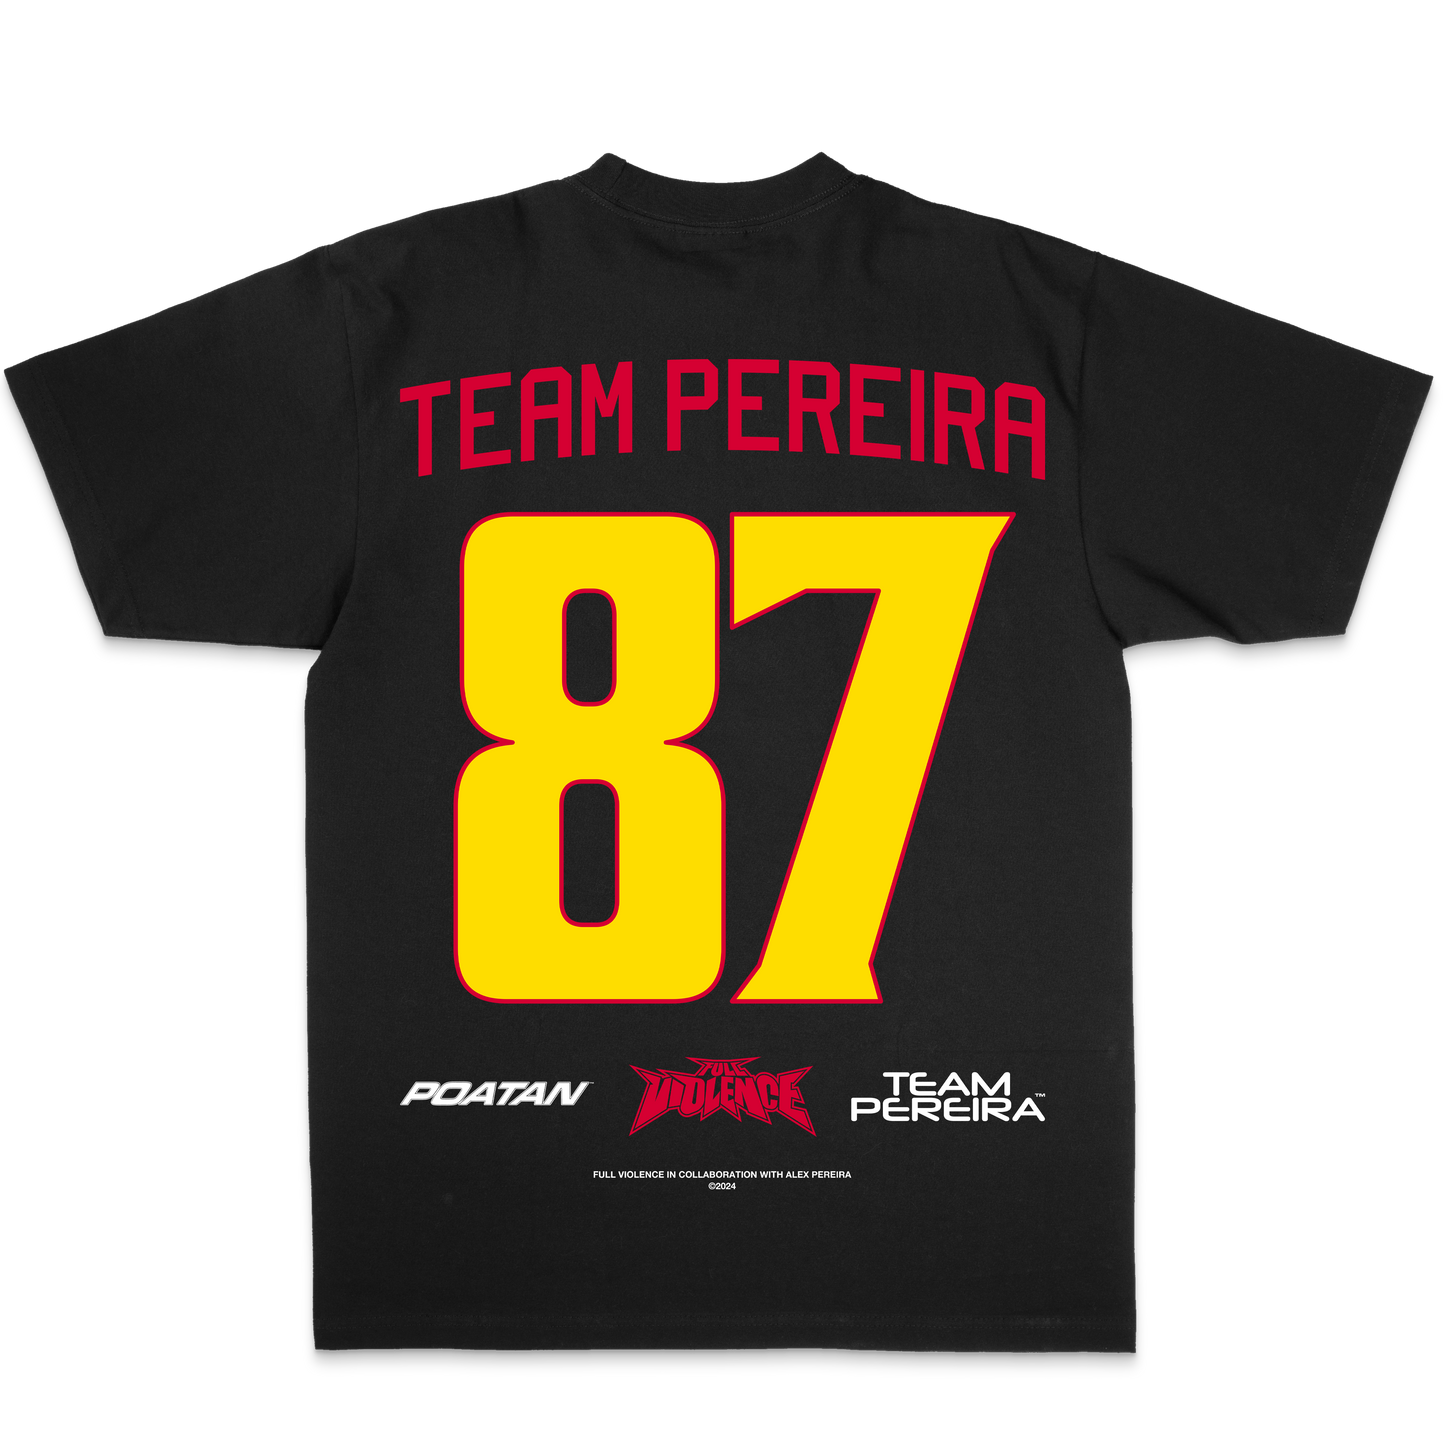 Team Pereira "Active" Tee in Black